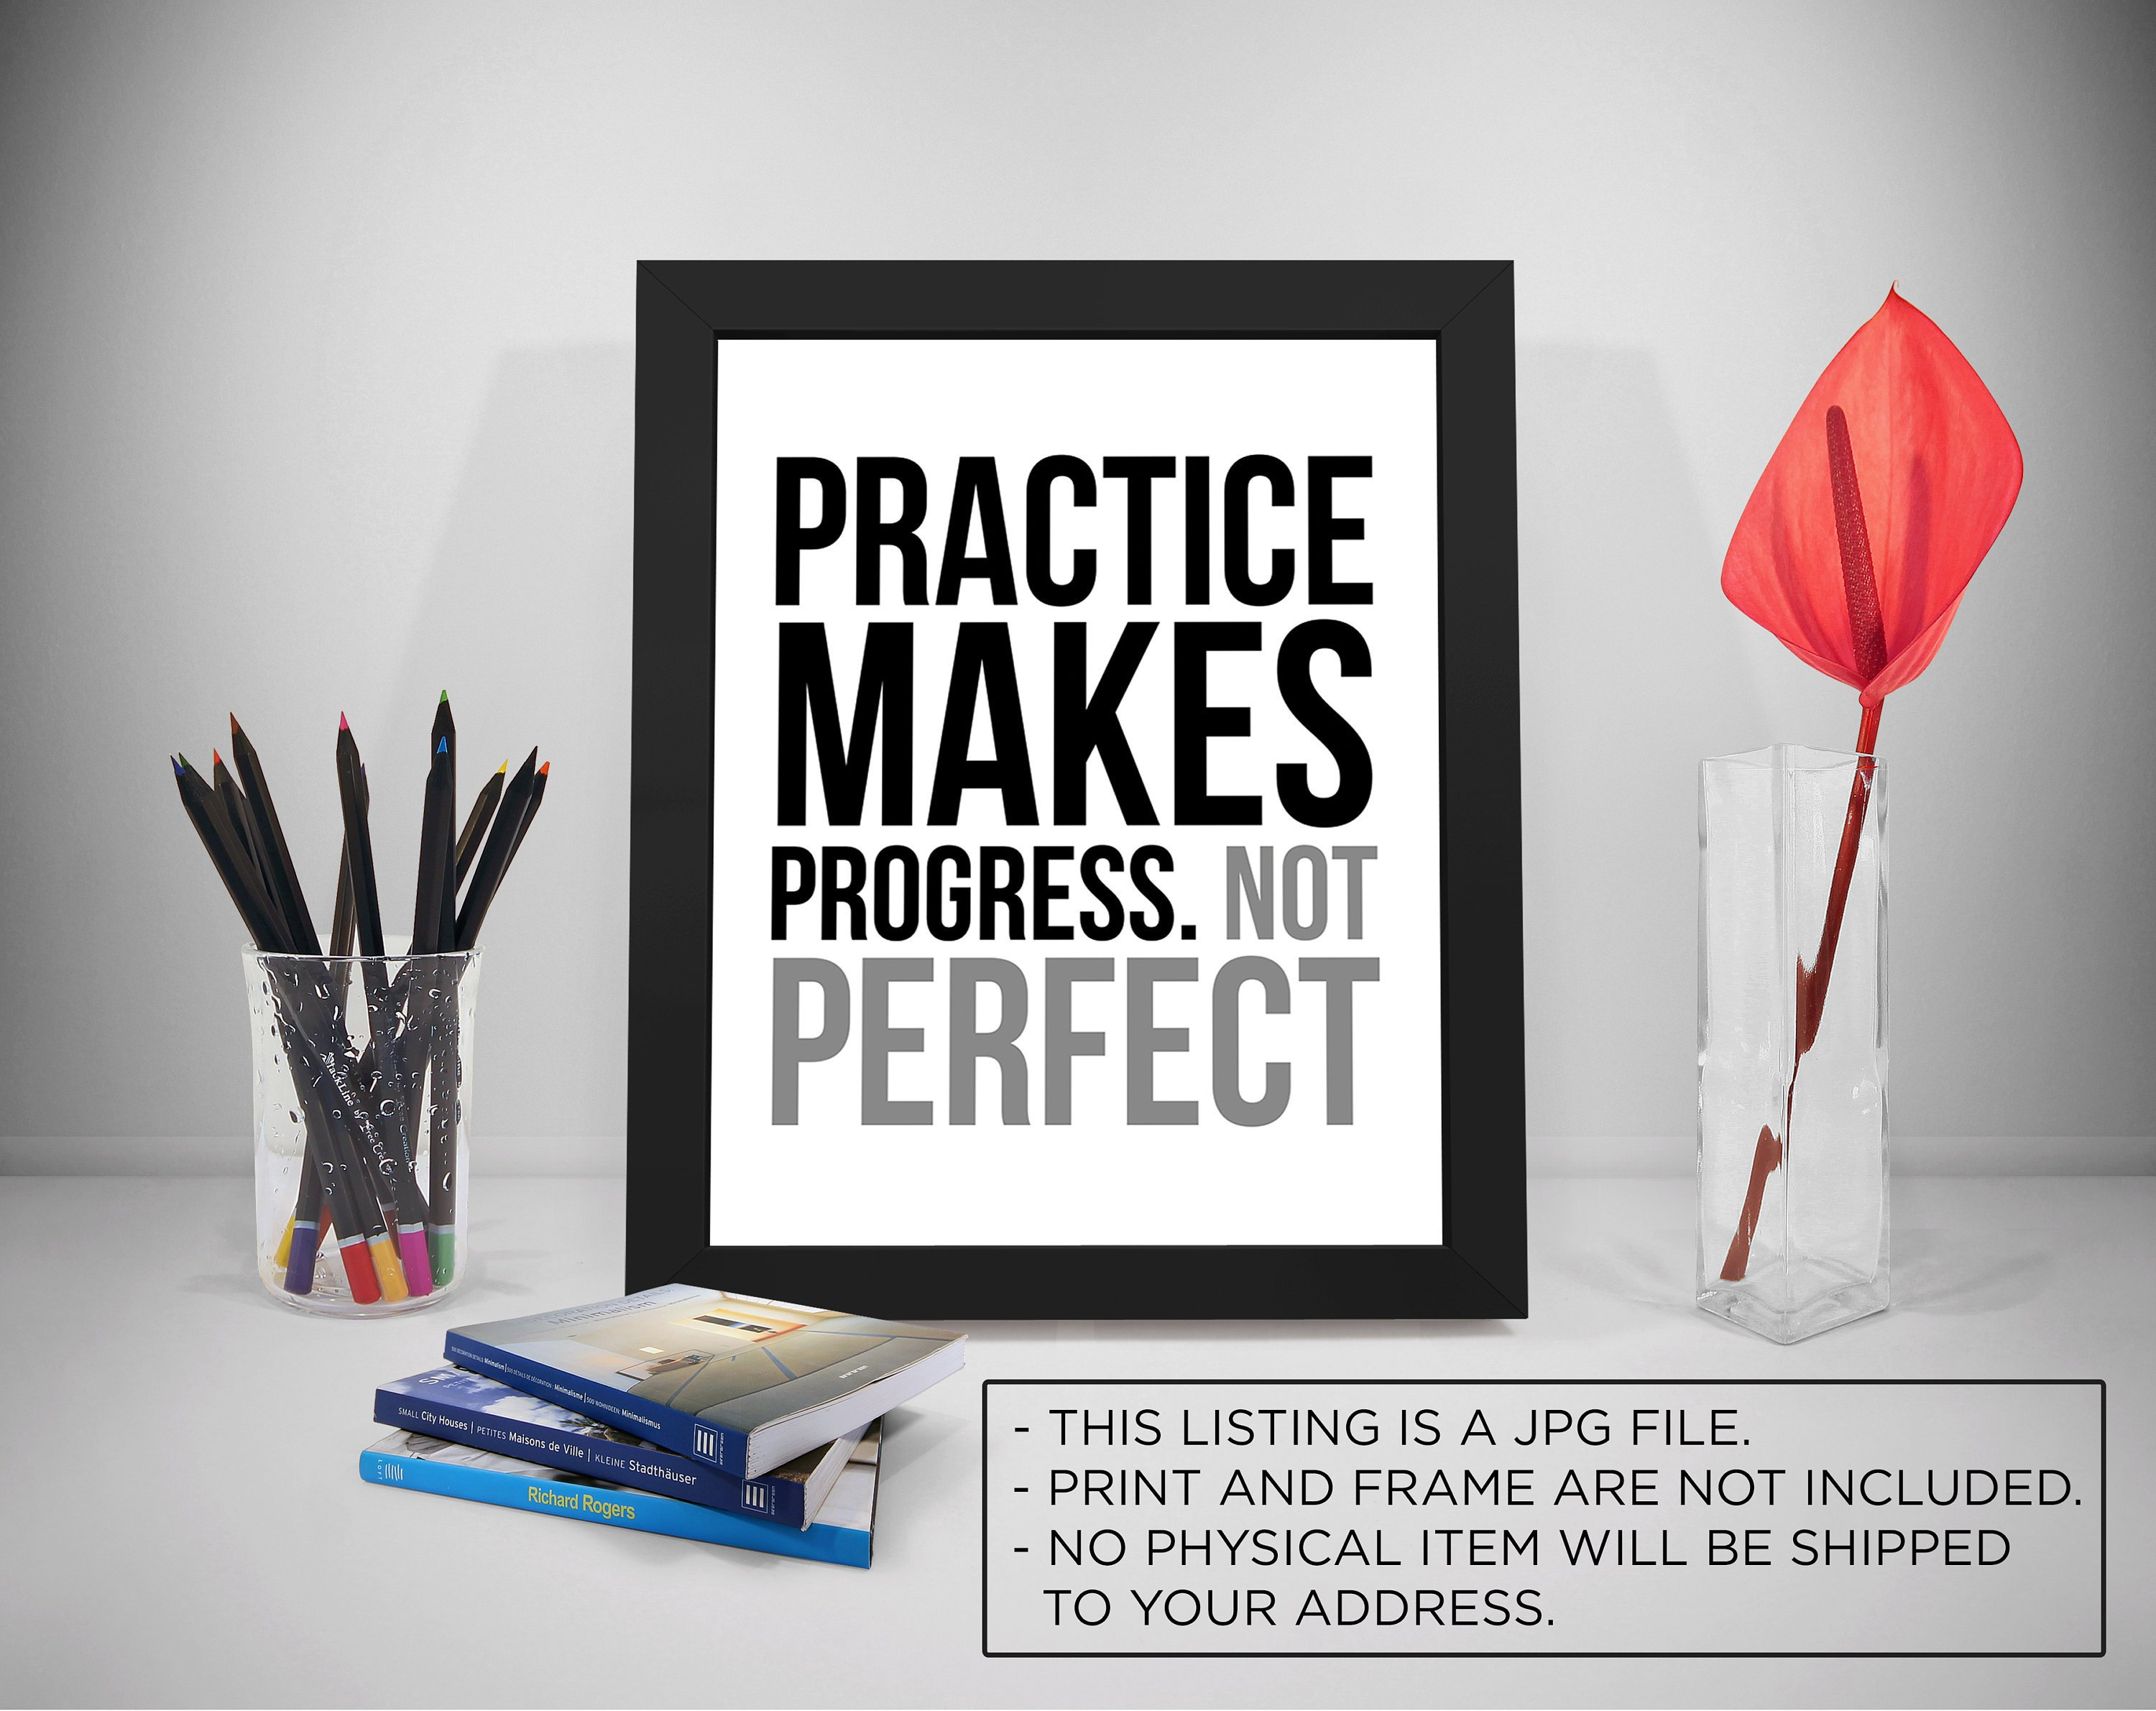 Practice makes perfect.